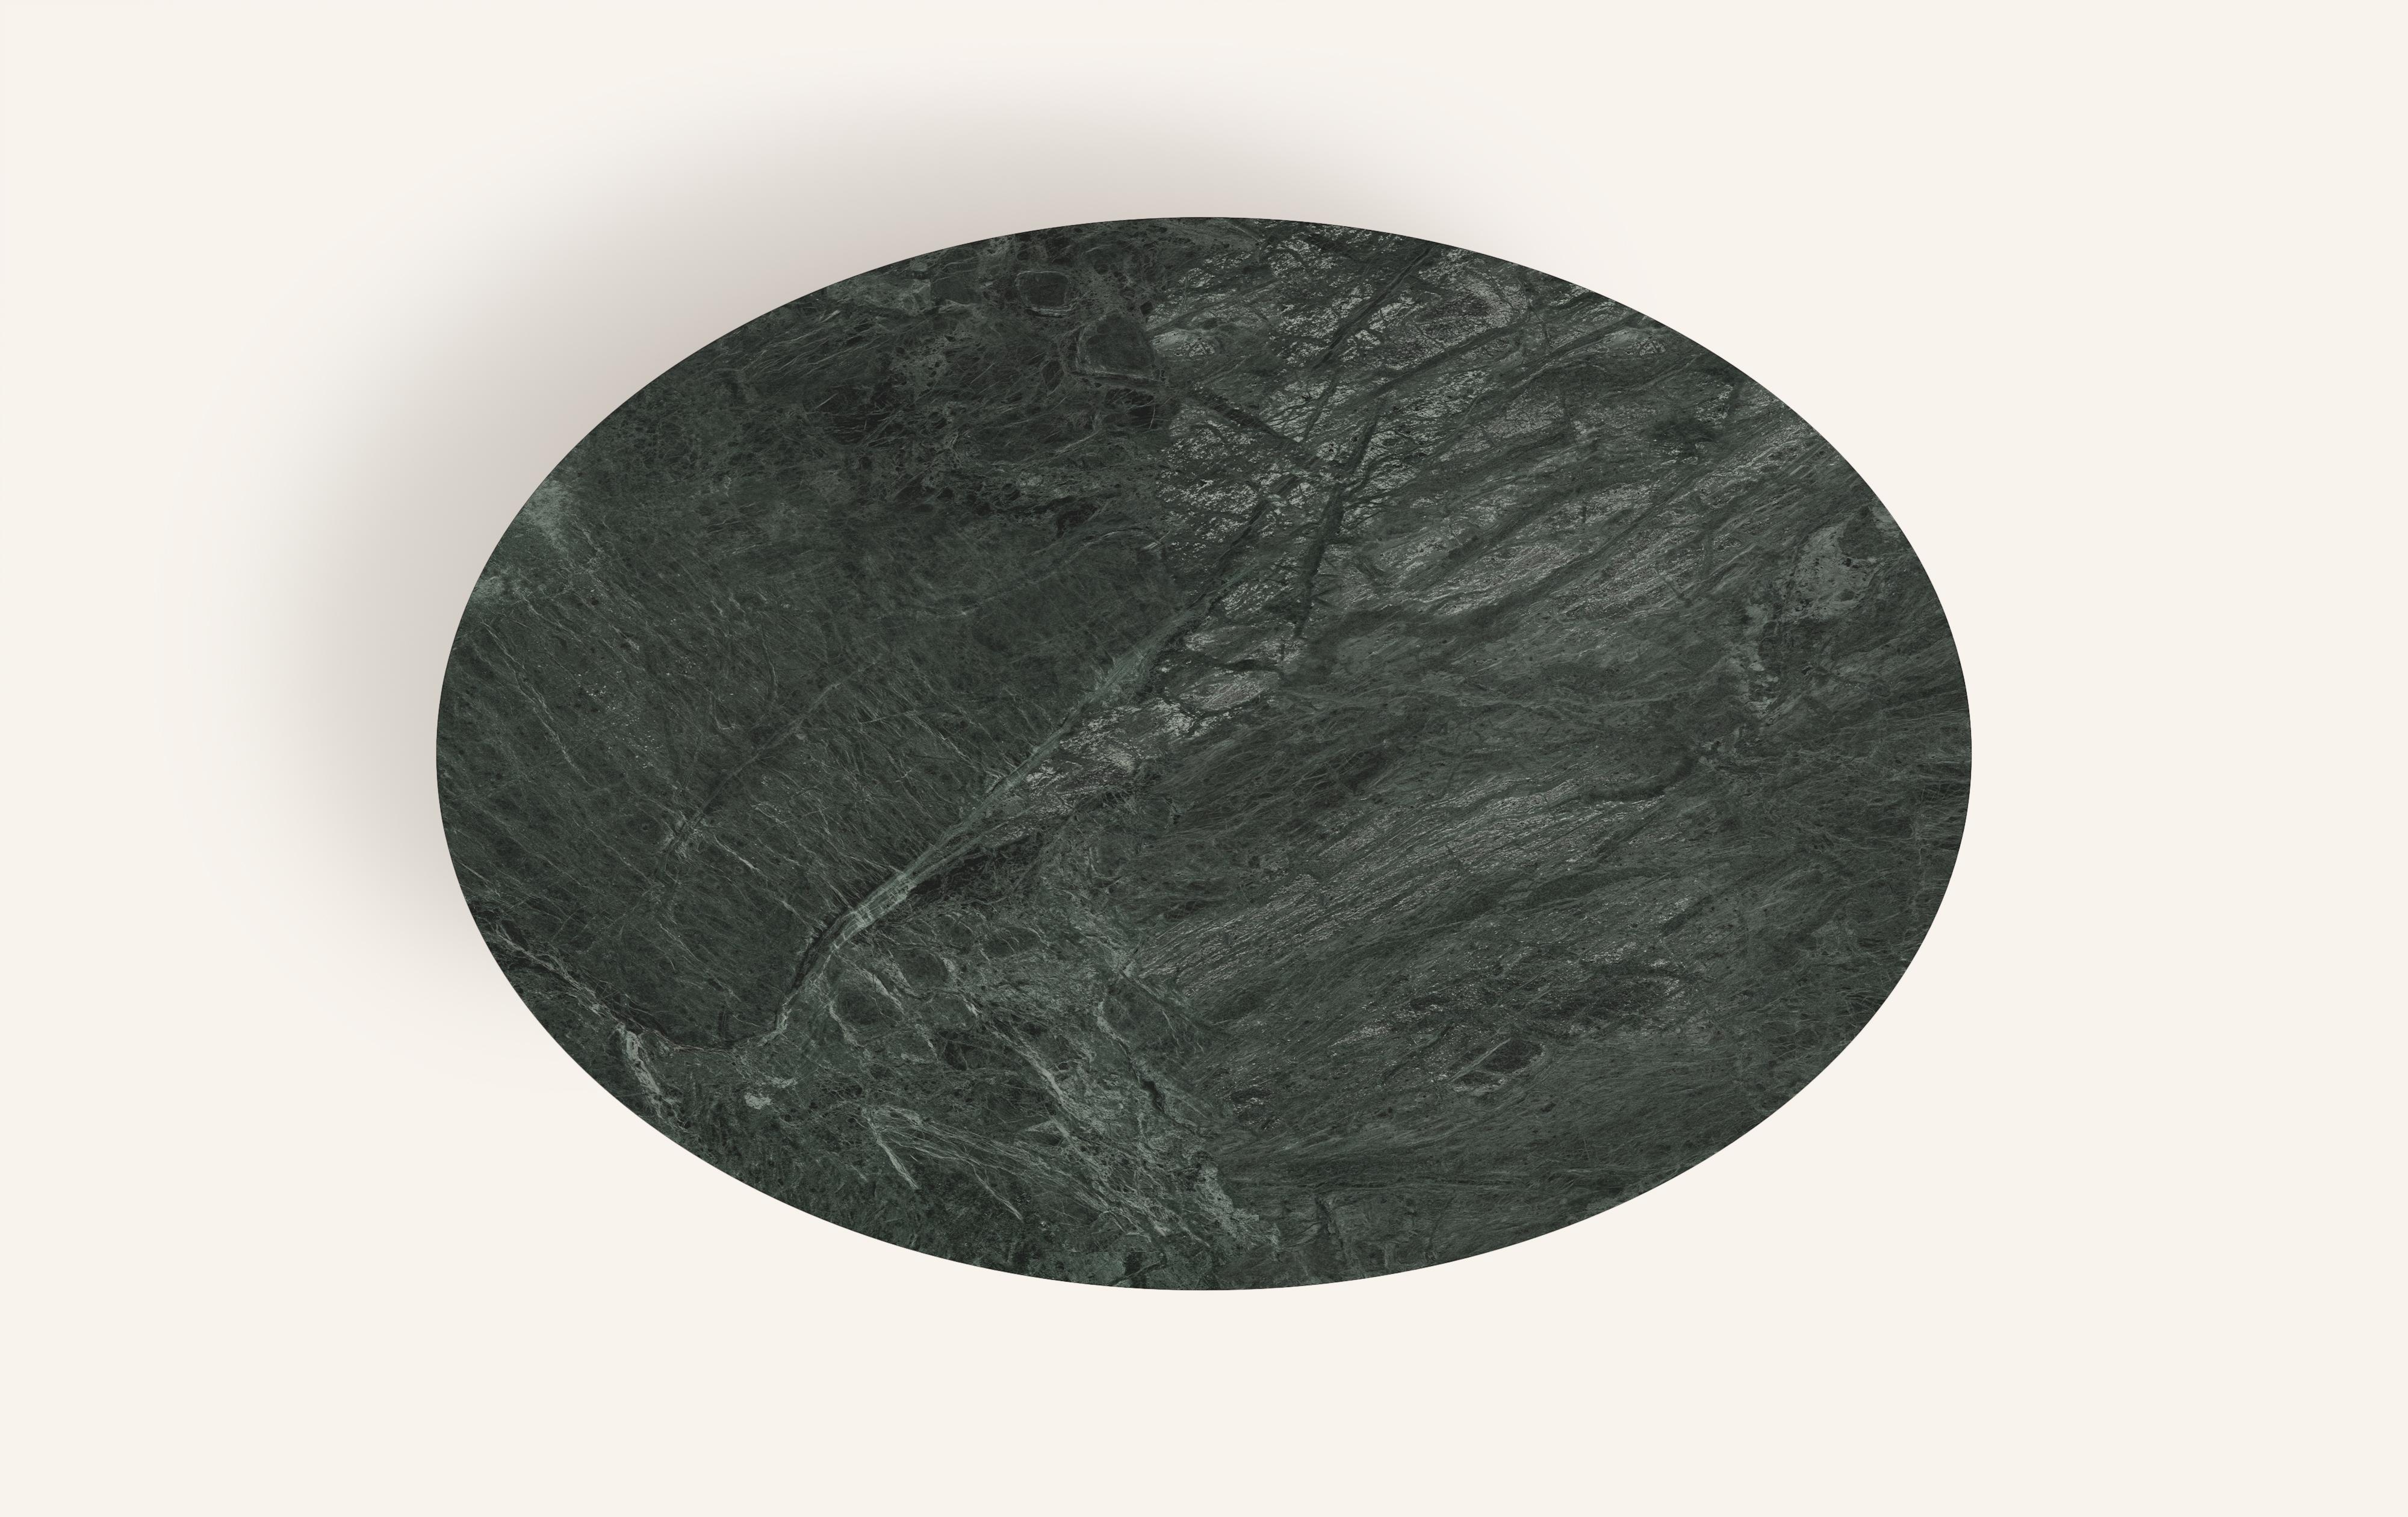 FORM(LA) Sfera Oval Coffee Table 60”L x 42”W x 16”H Verde Guatemala Marble In New Condition For Sale In Los Angeles, CA